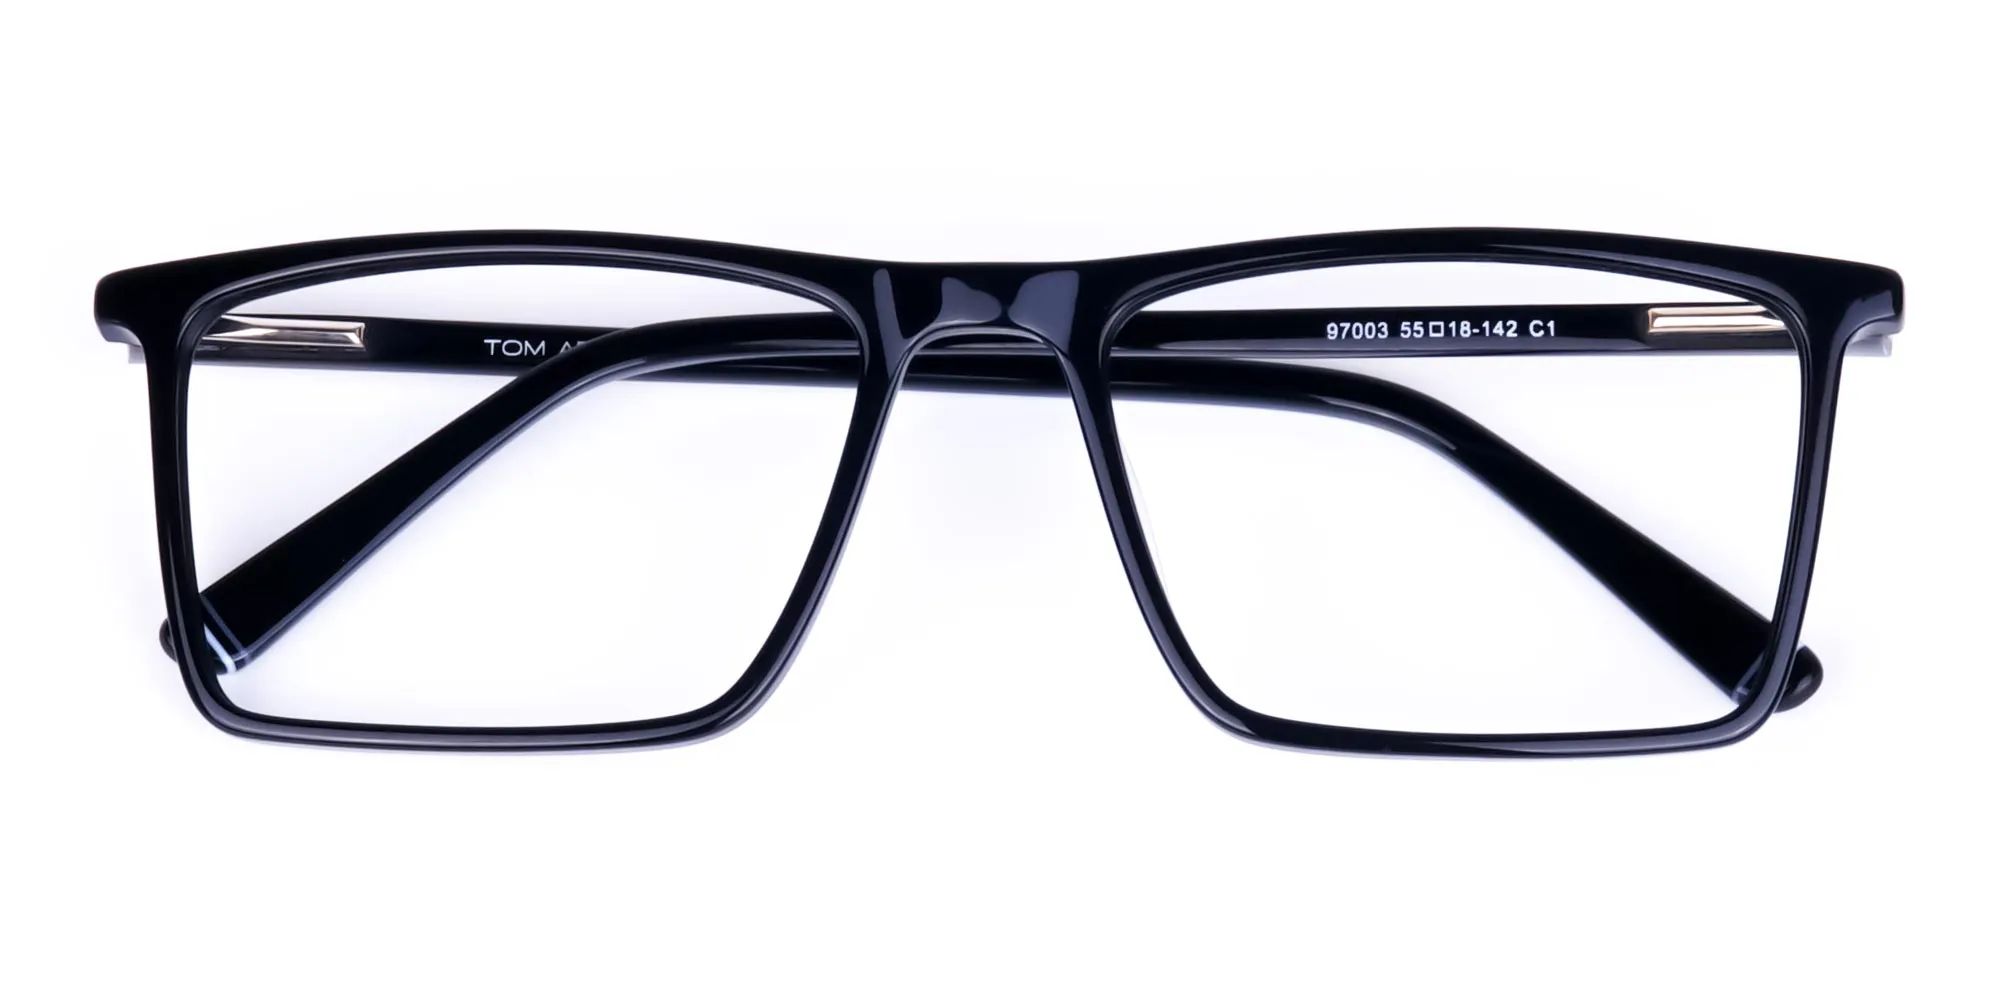 Fashionable-Black-Full-Rim-Rectangular-Glasses-2